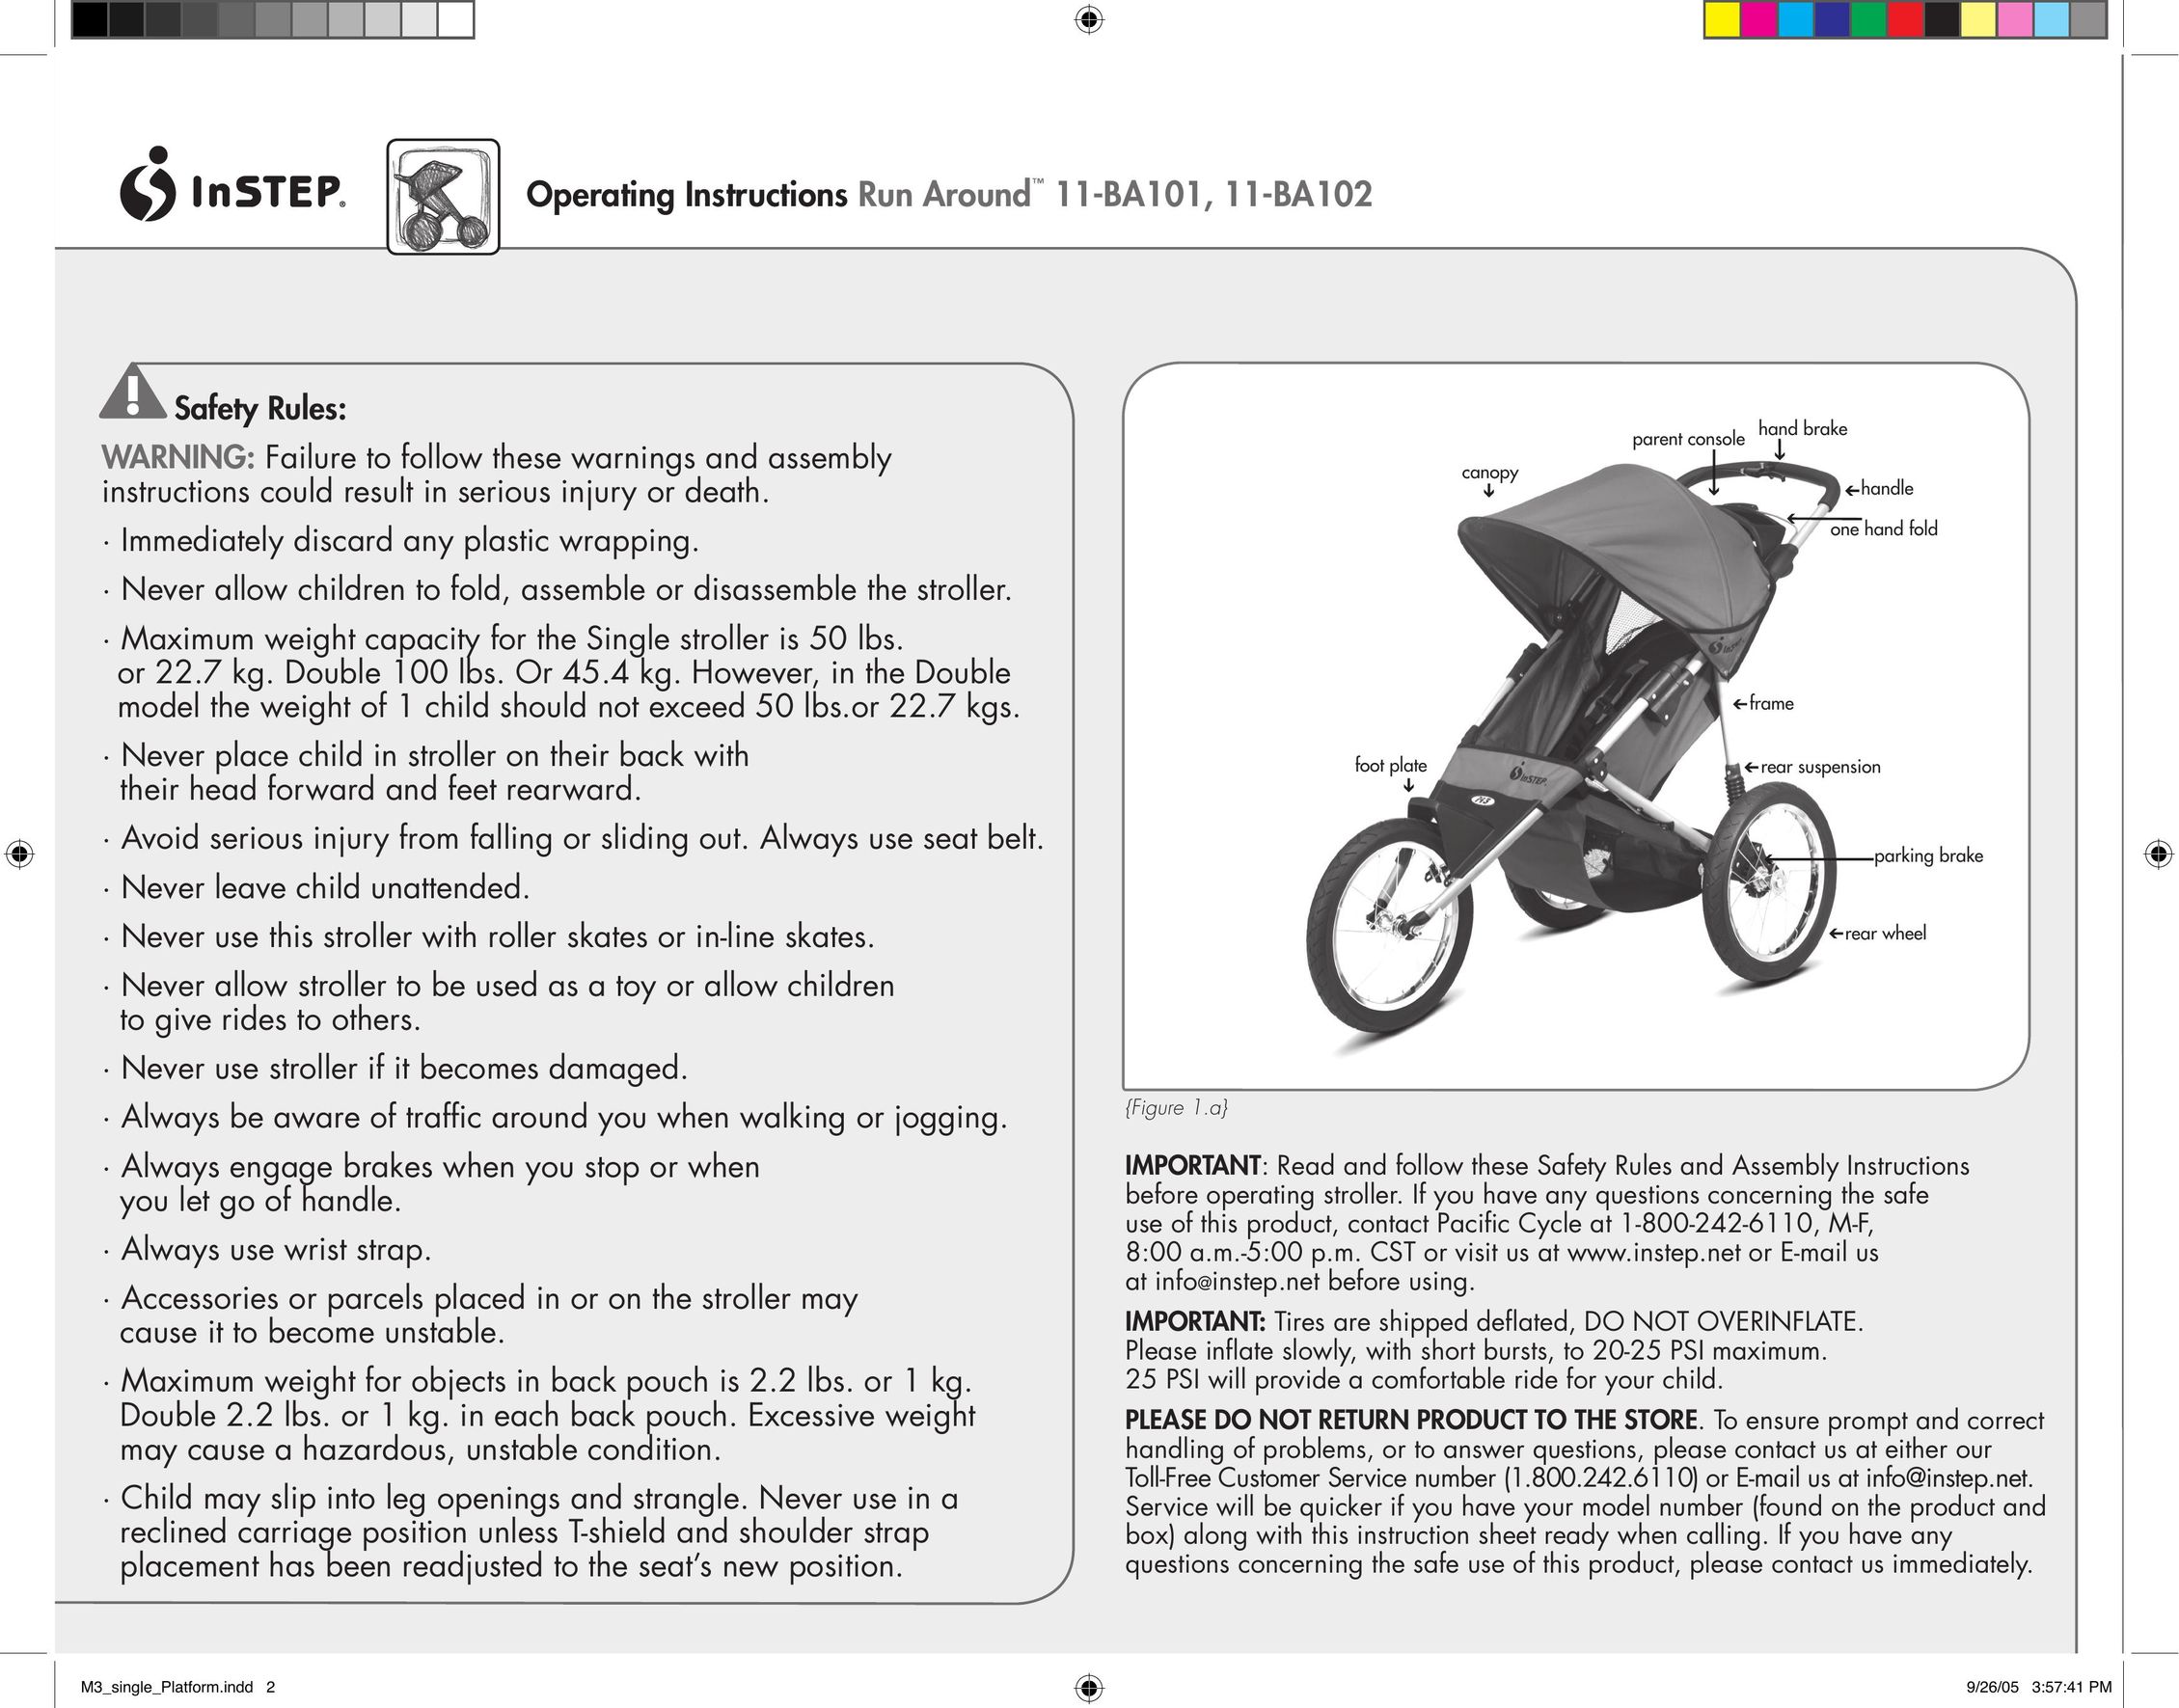 InStep 11-BA102 Stroller User Manual